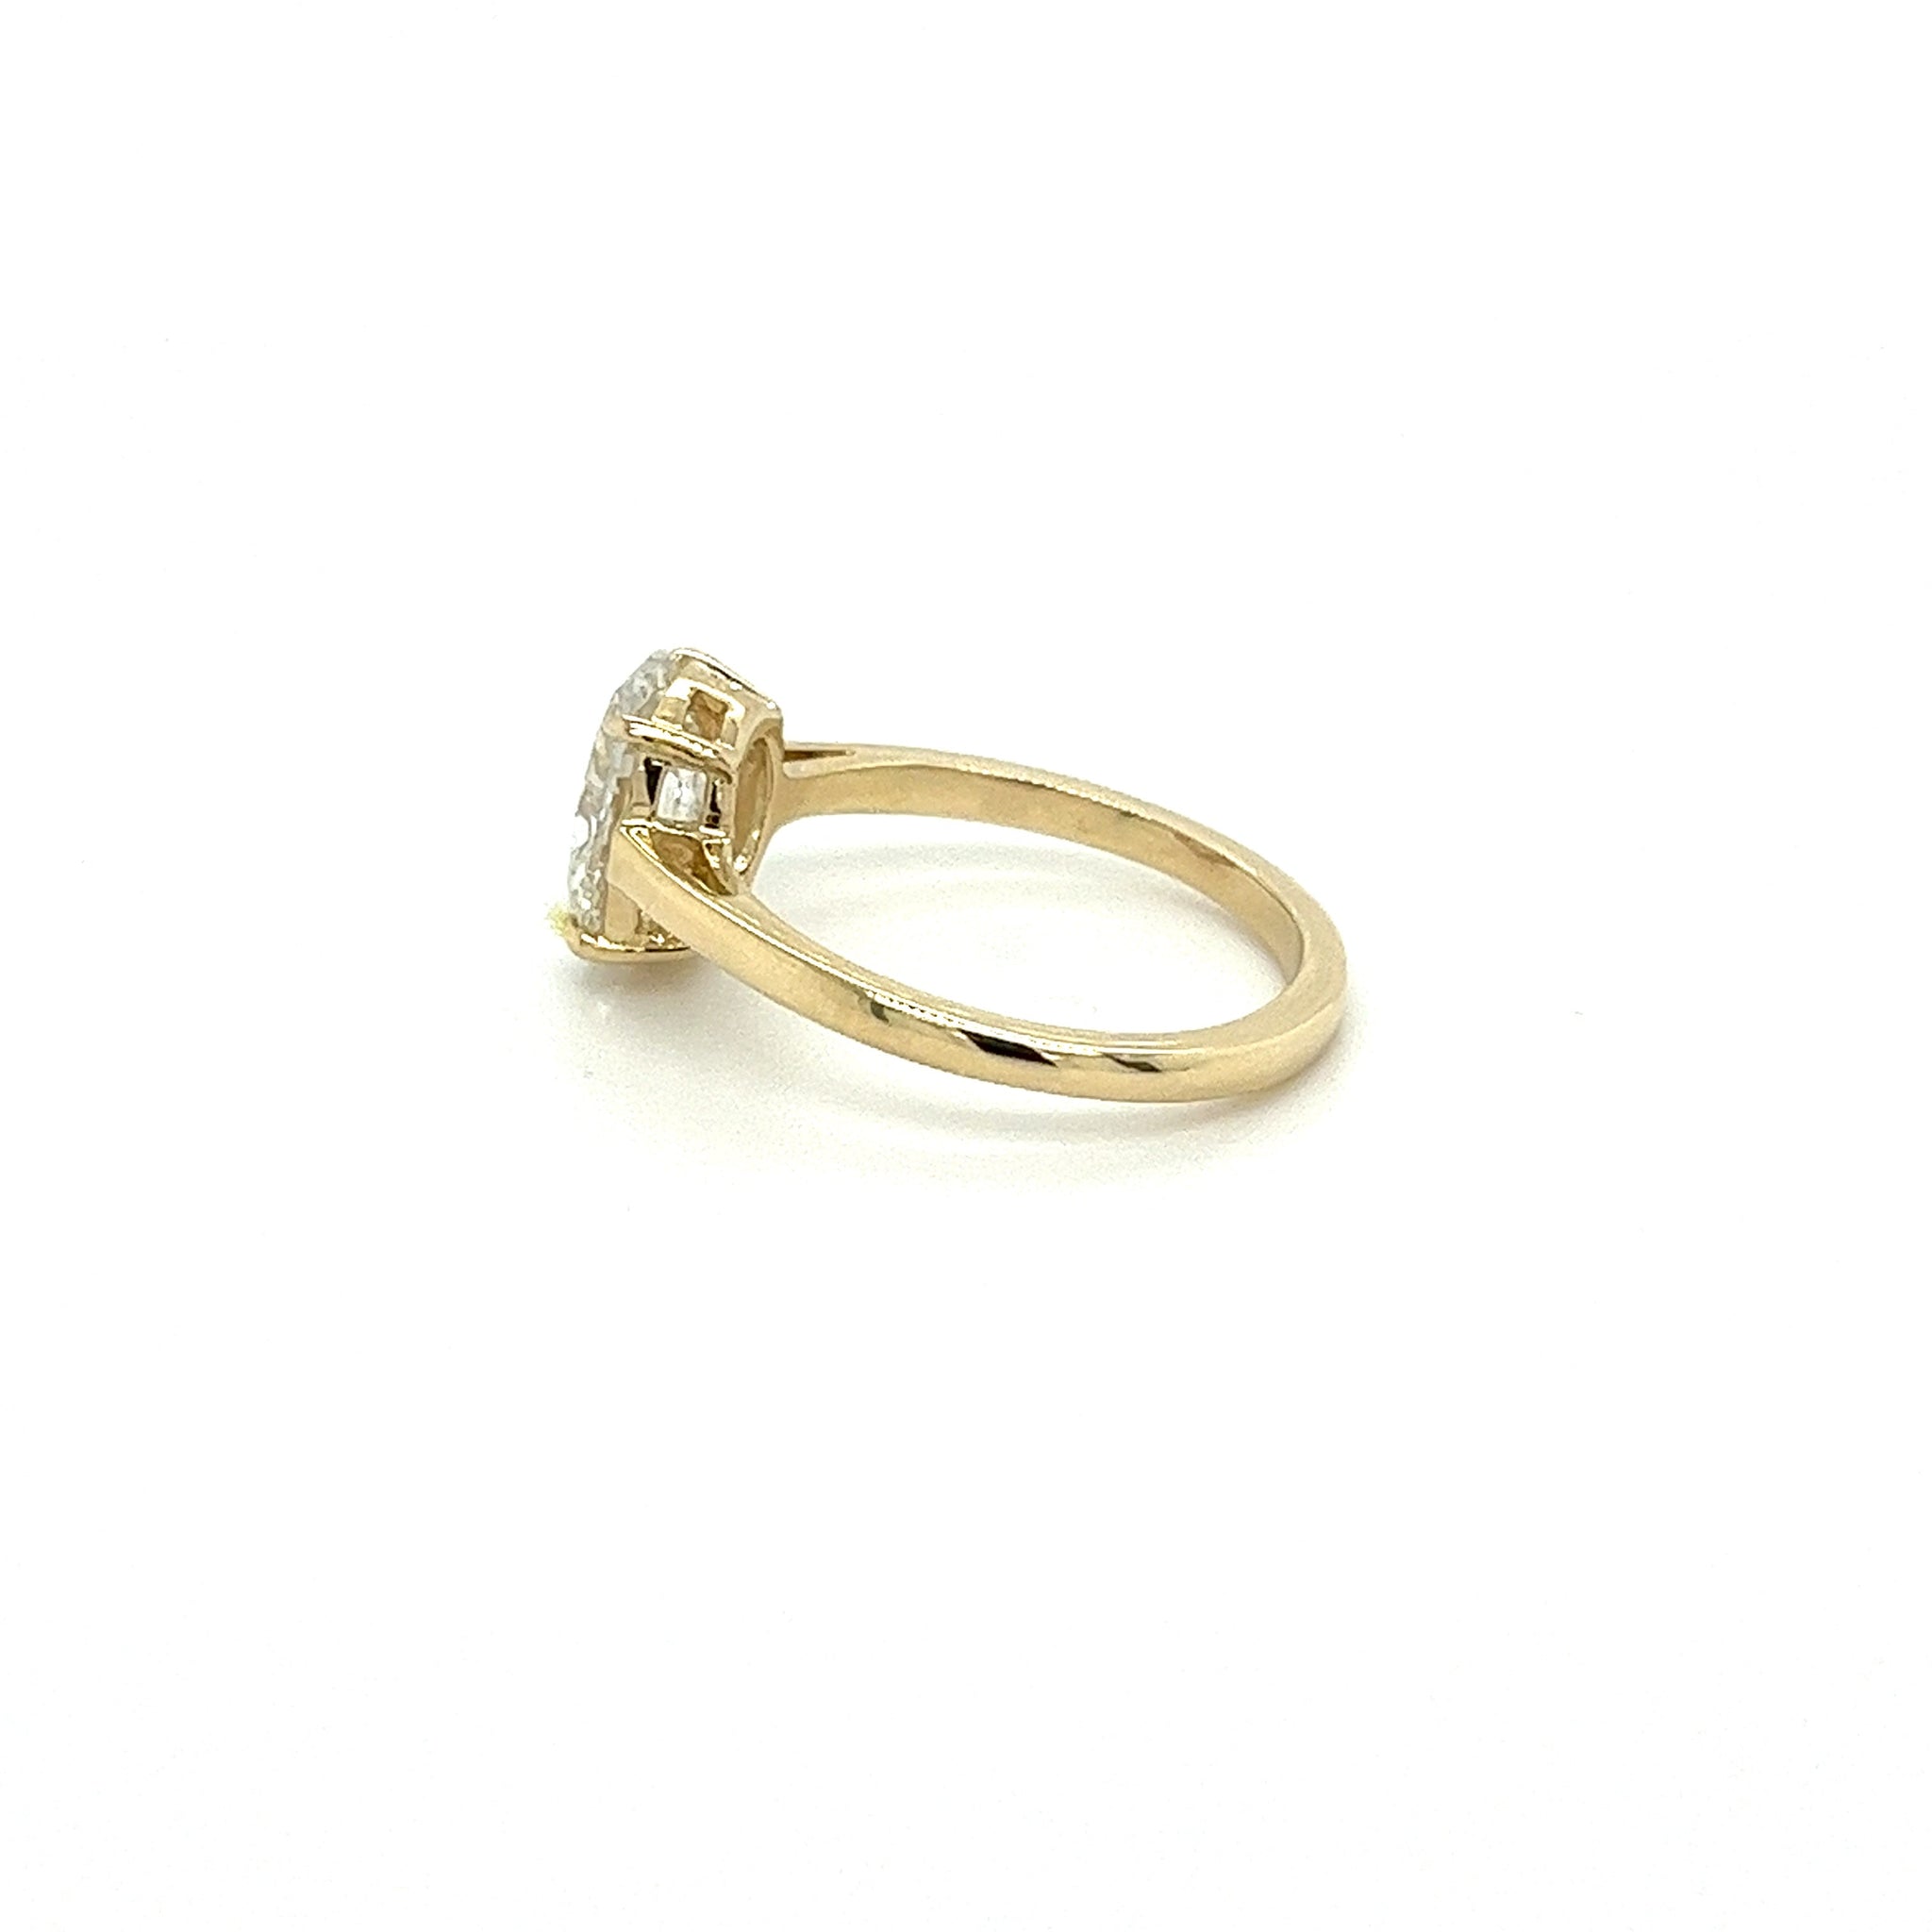 2.06 Carat Oval Cut Lab Grown Diamond CVD Ring in 14K Yellow Gold Low Profile Setting